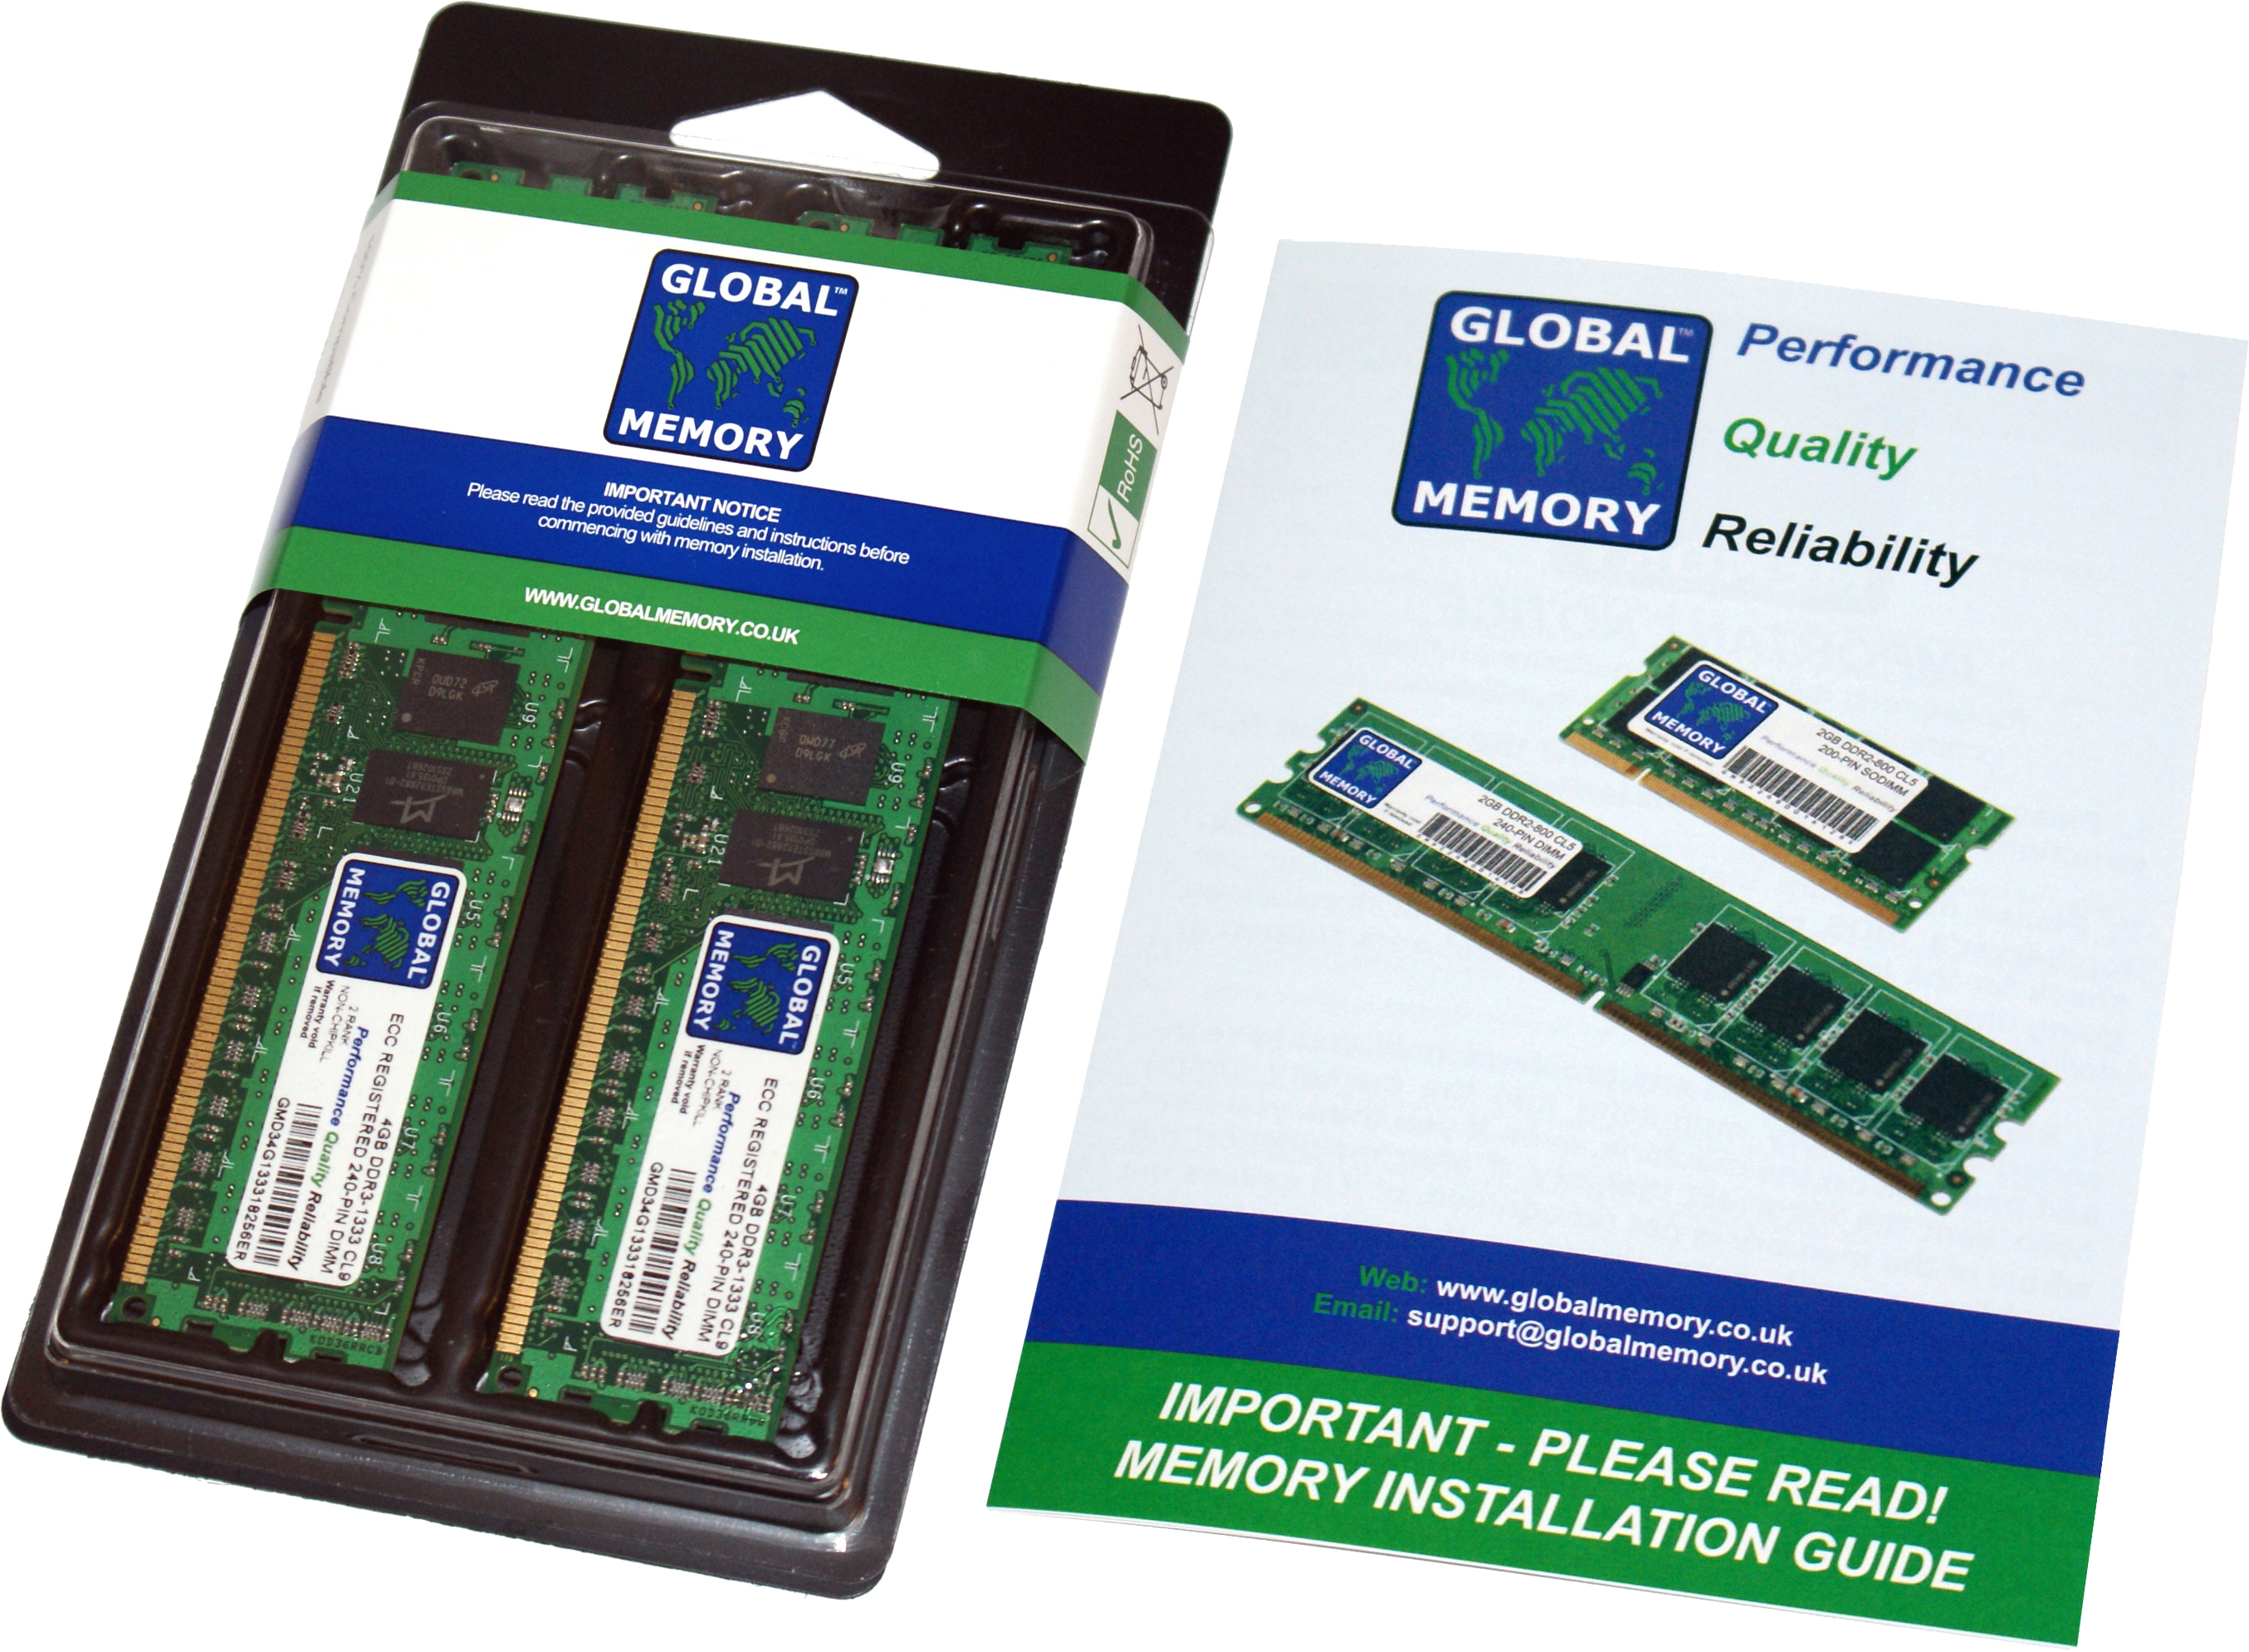 32GB (2 x 16GB) DDR4 2933MHz PC4-23400 288-PIN ECC REGISTERED DIMM (RDIMM) MEMORY RAM KIT FOR DELL SERVERS/WORKSTATIONS (4 RANK KIT CHIPKILL)